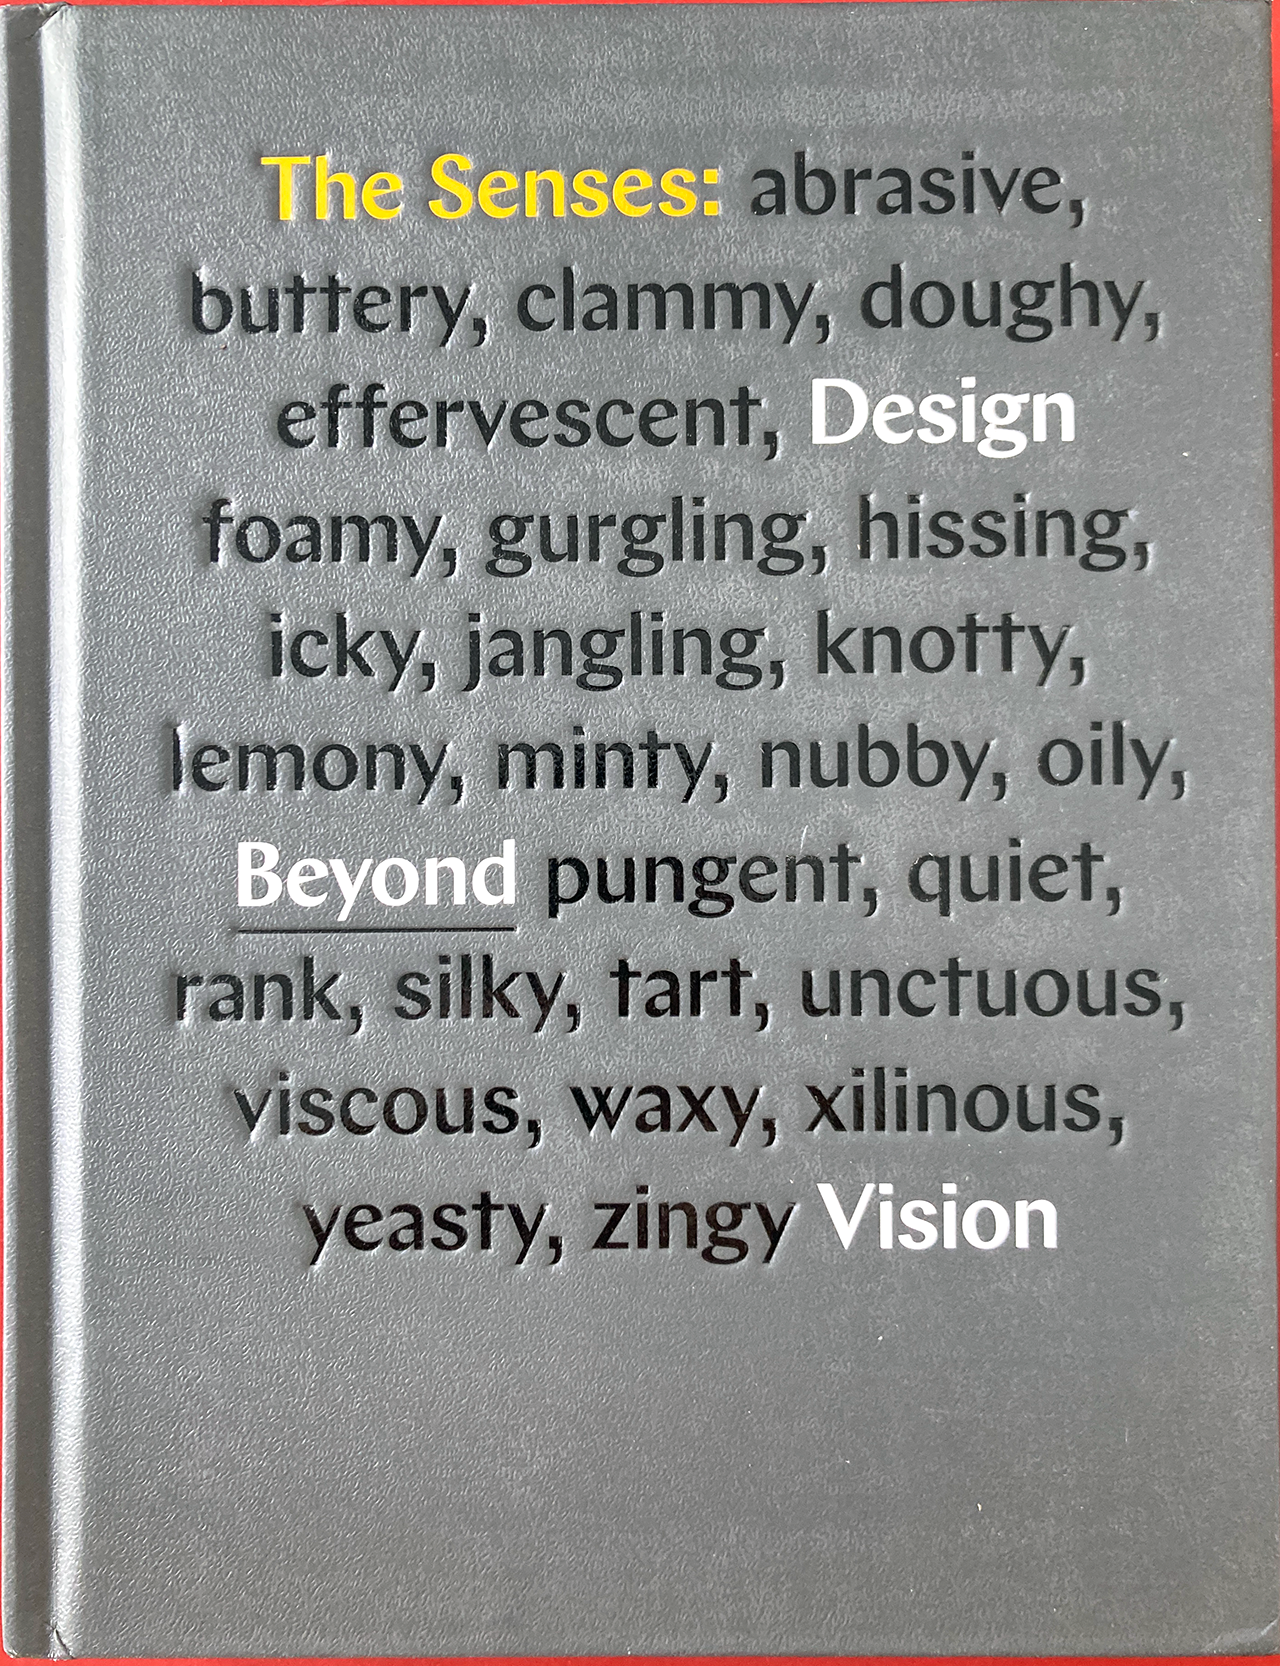 The senses: Design Beyond Vision Book Cover